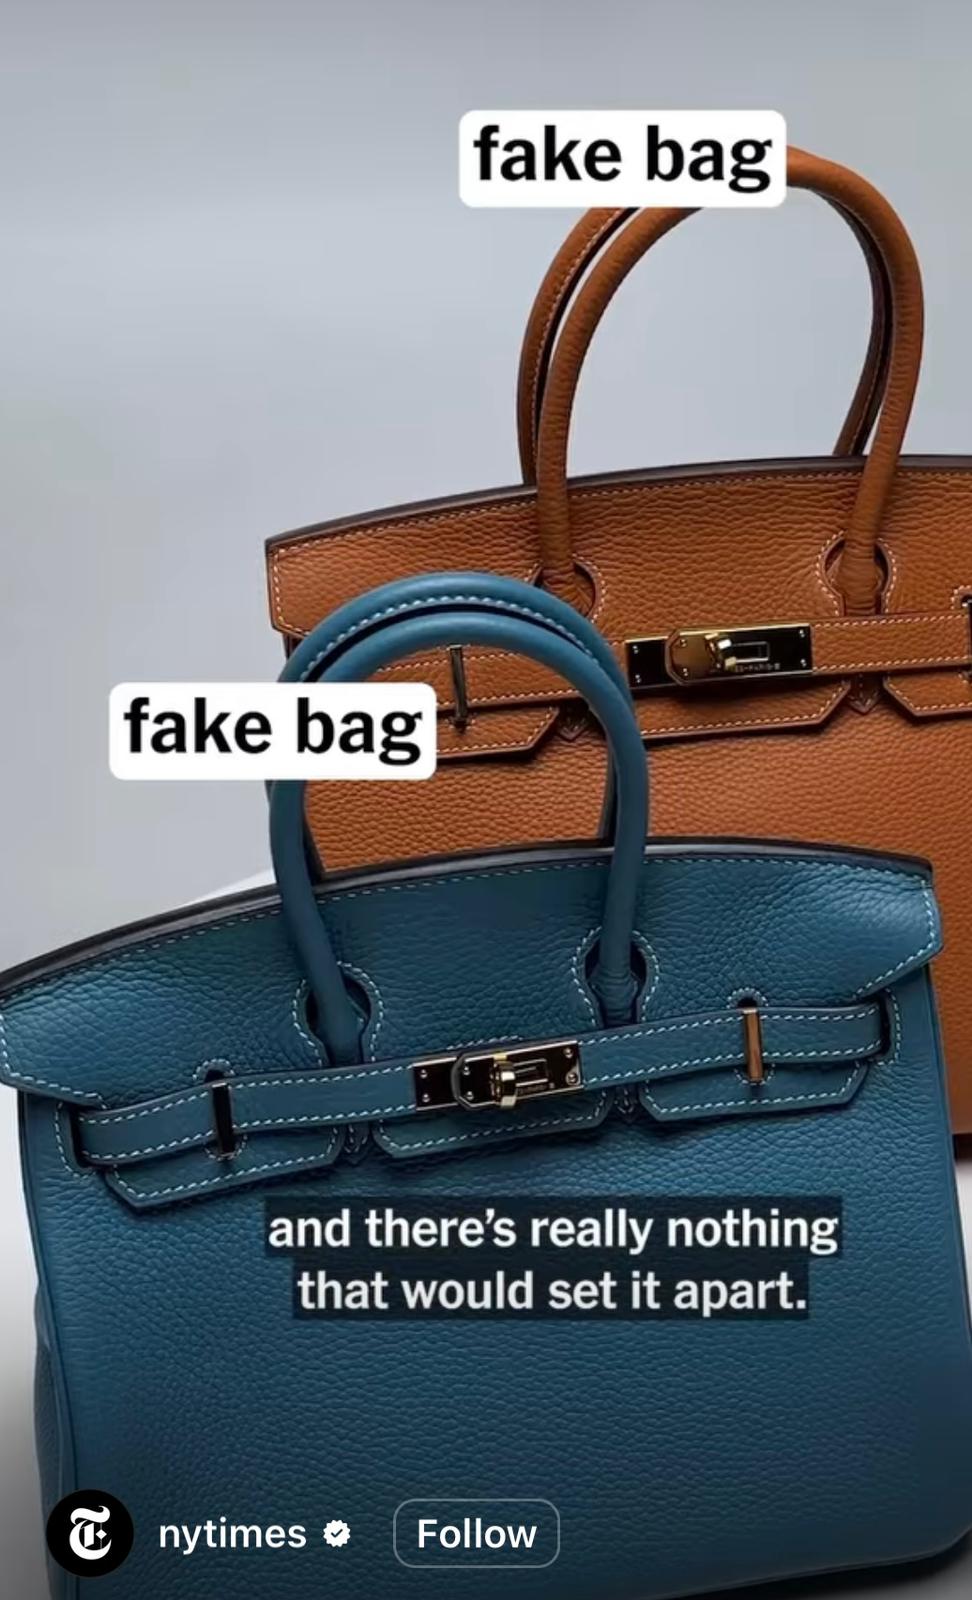 The Birkin Bag Gets an Update - The New York Times